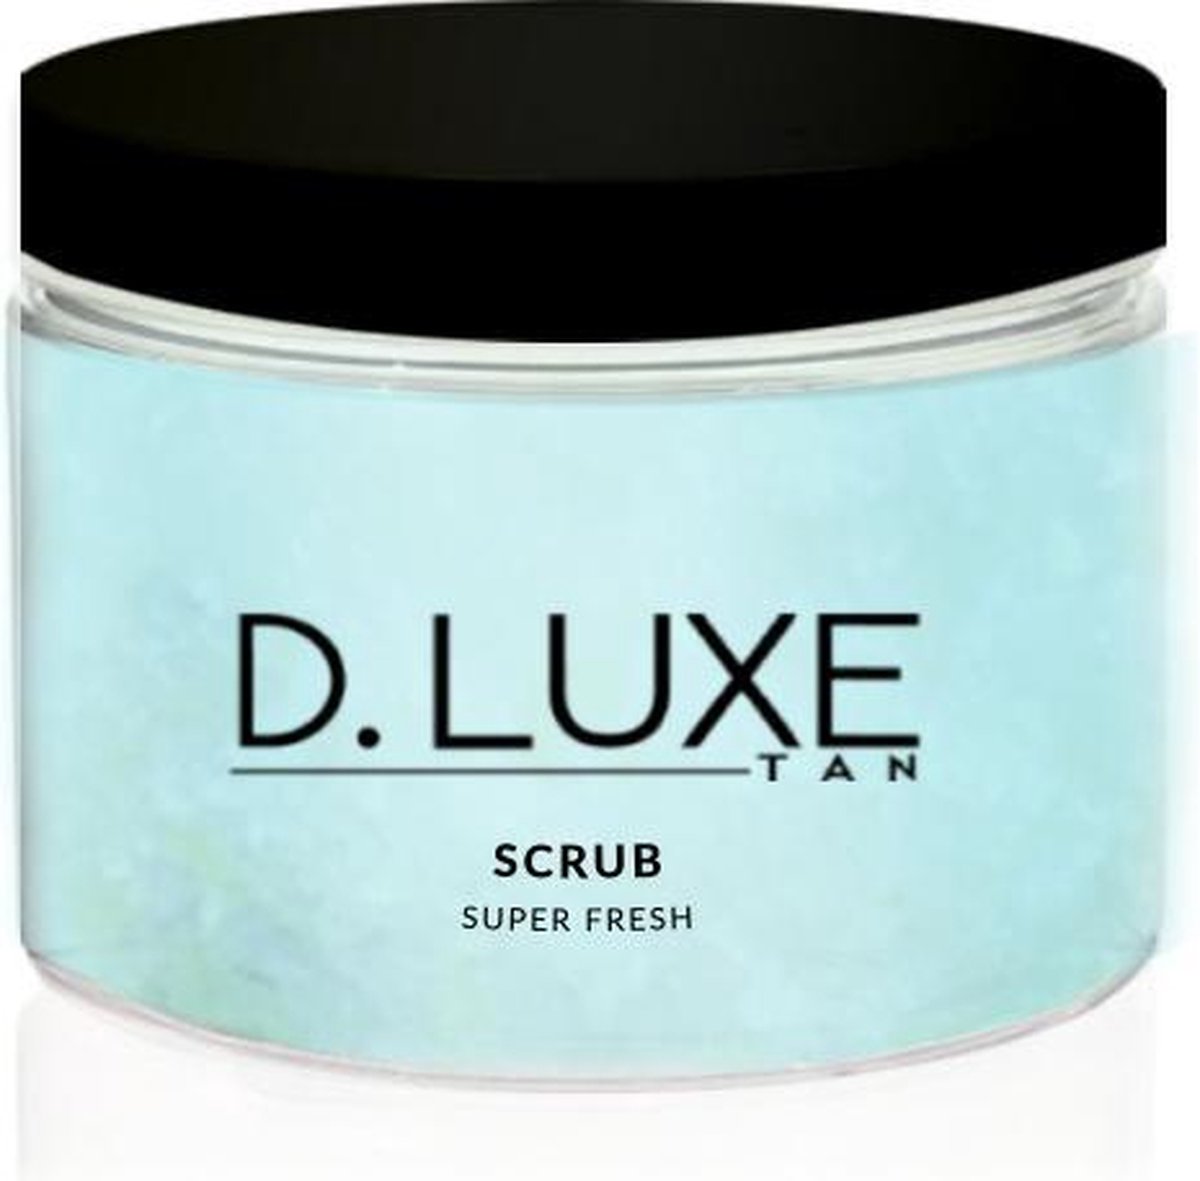 D.Luxe Tan Olie Vrije Scrub 'Super Fresh' - D.Luxe Tan